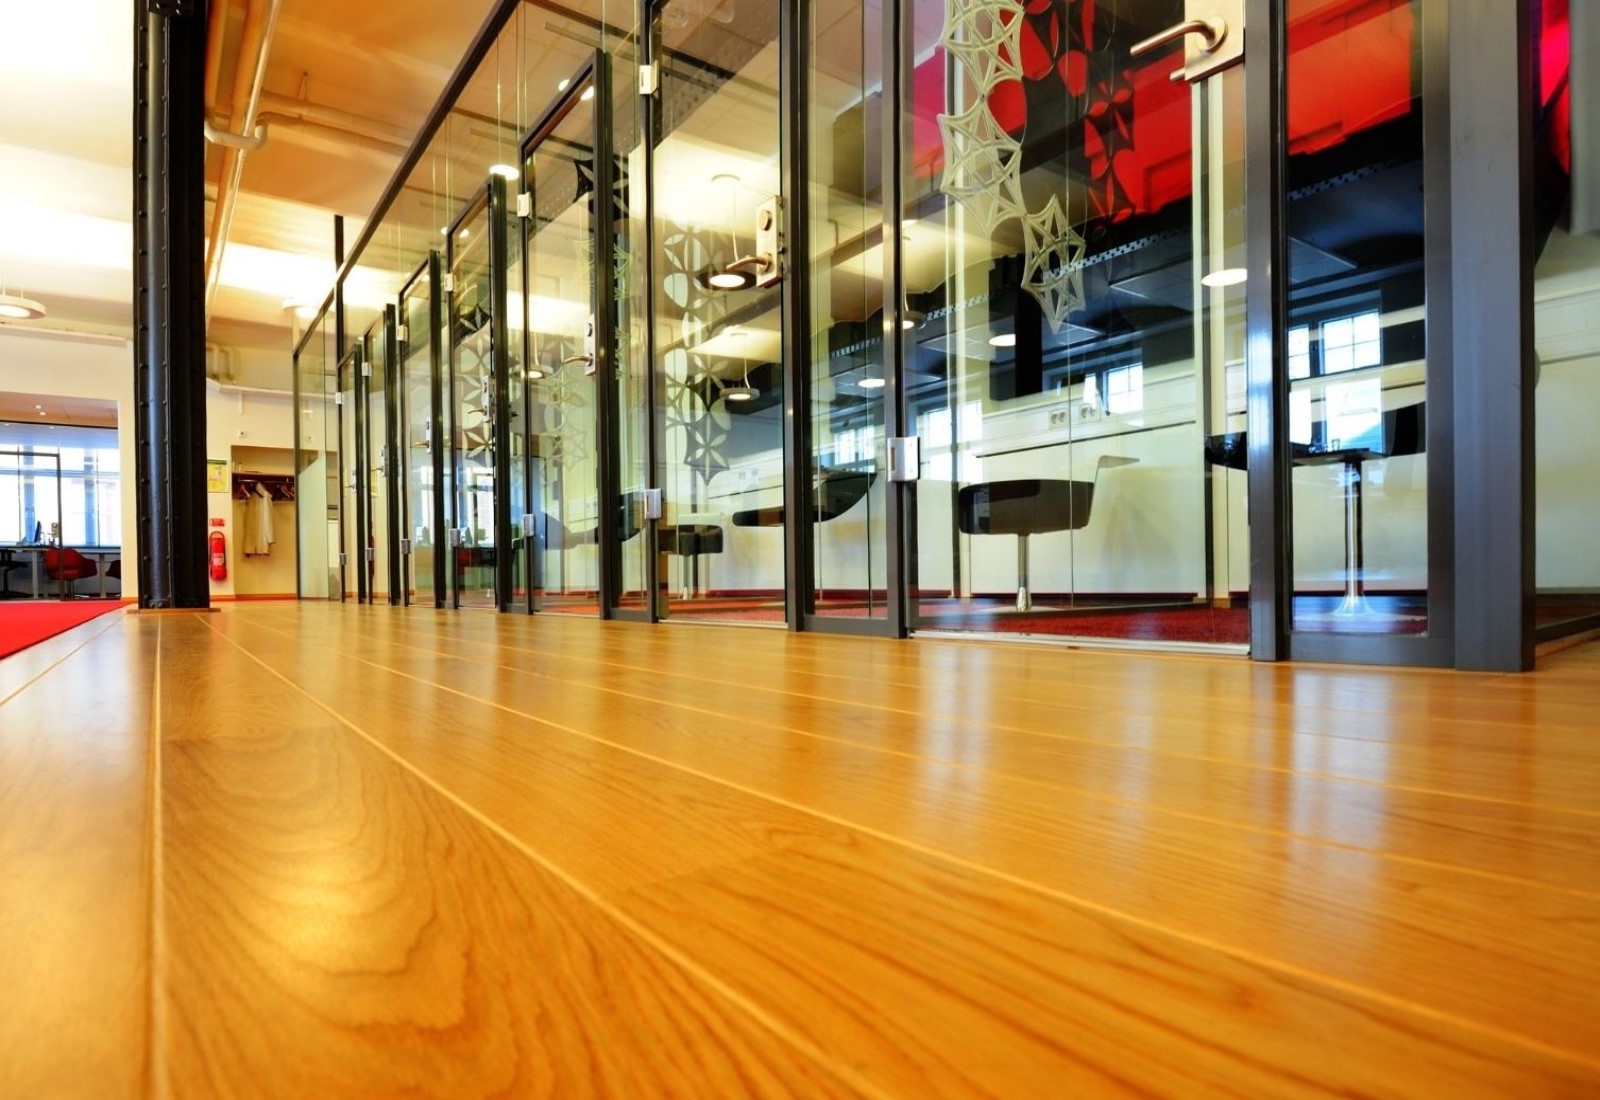 Commercial floor wooden polishing sanding polished timber hardwood